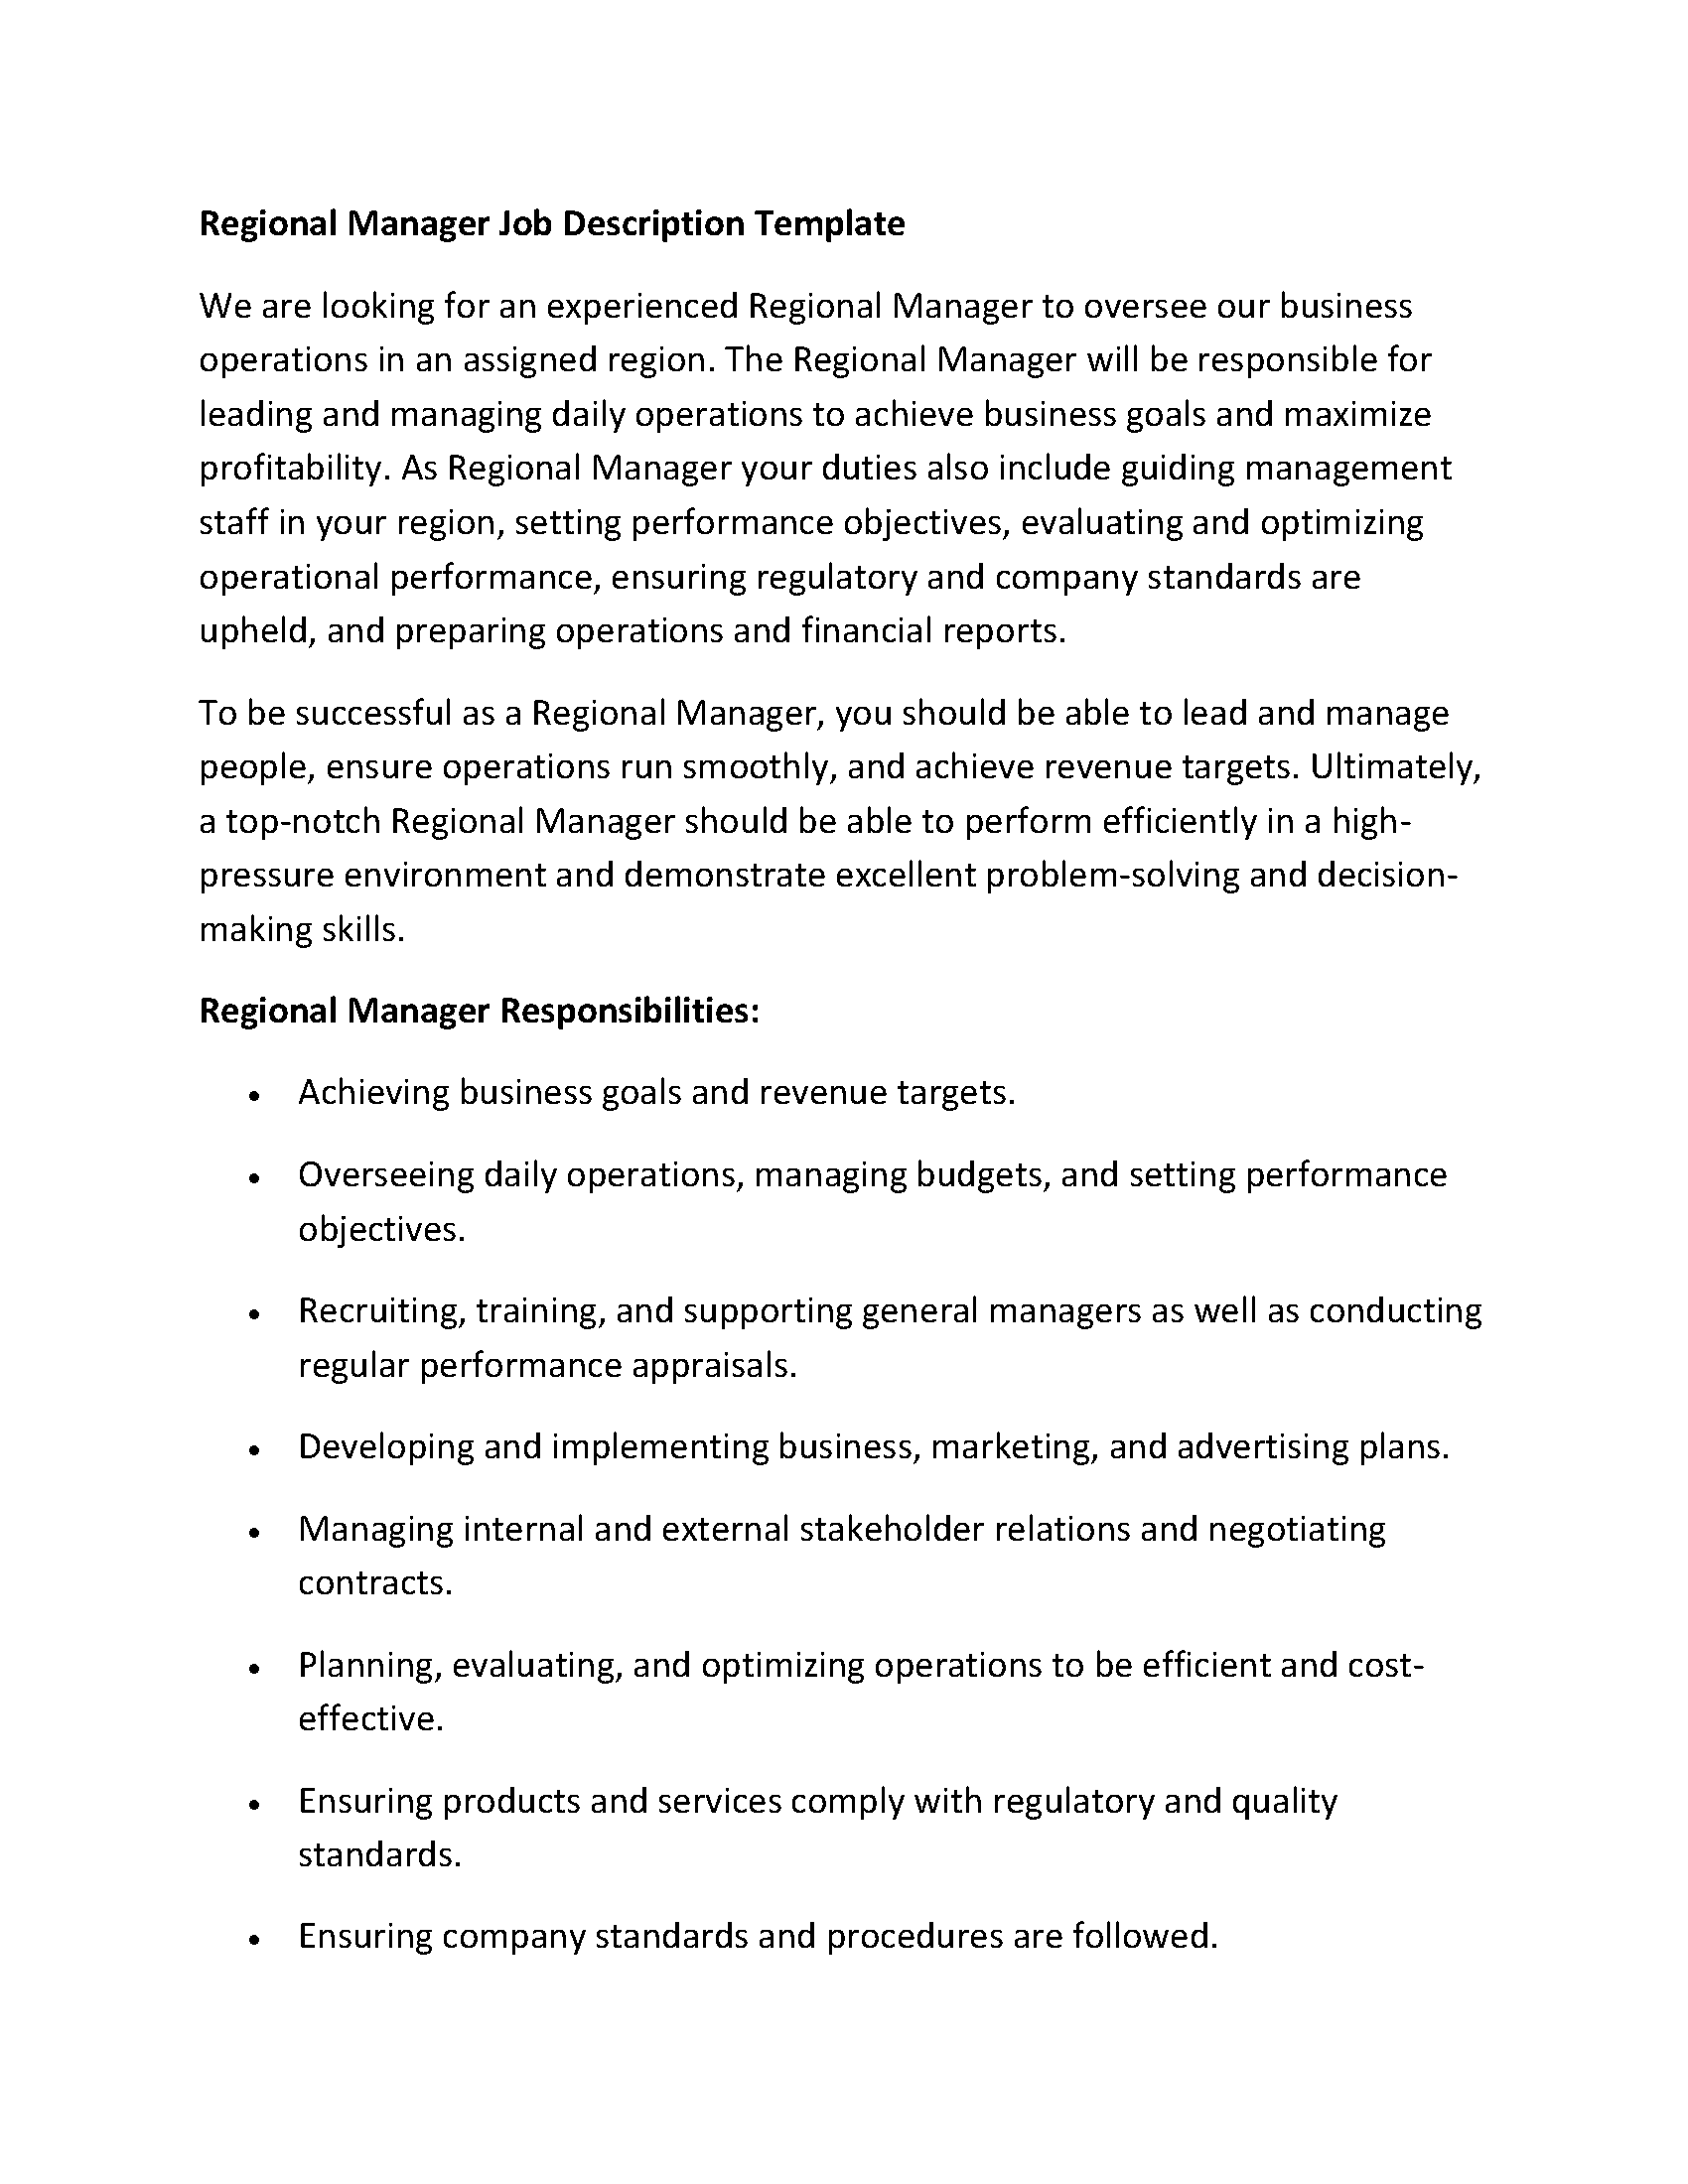 Regional Manager Job Description Template